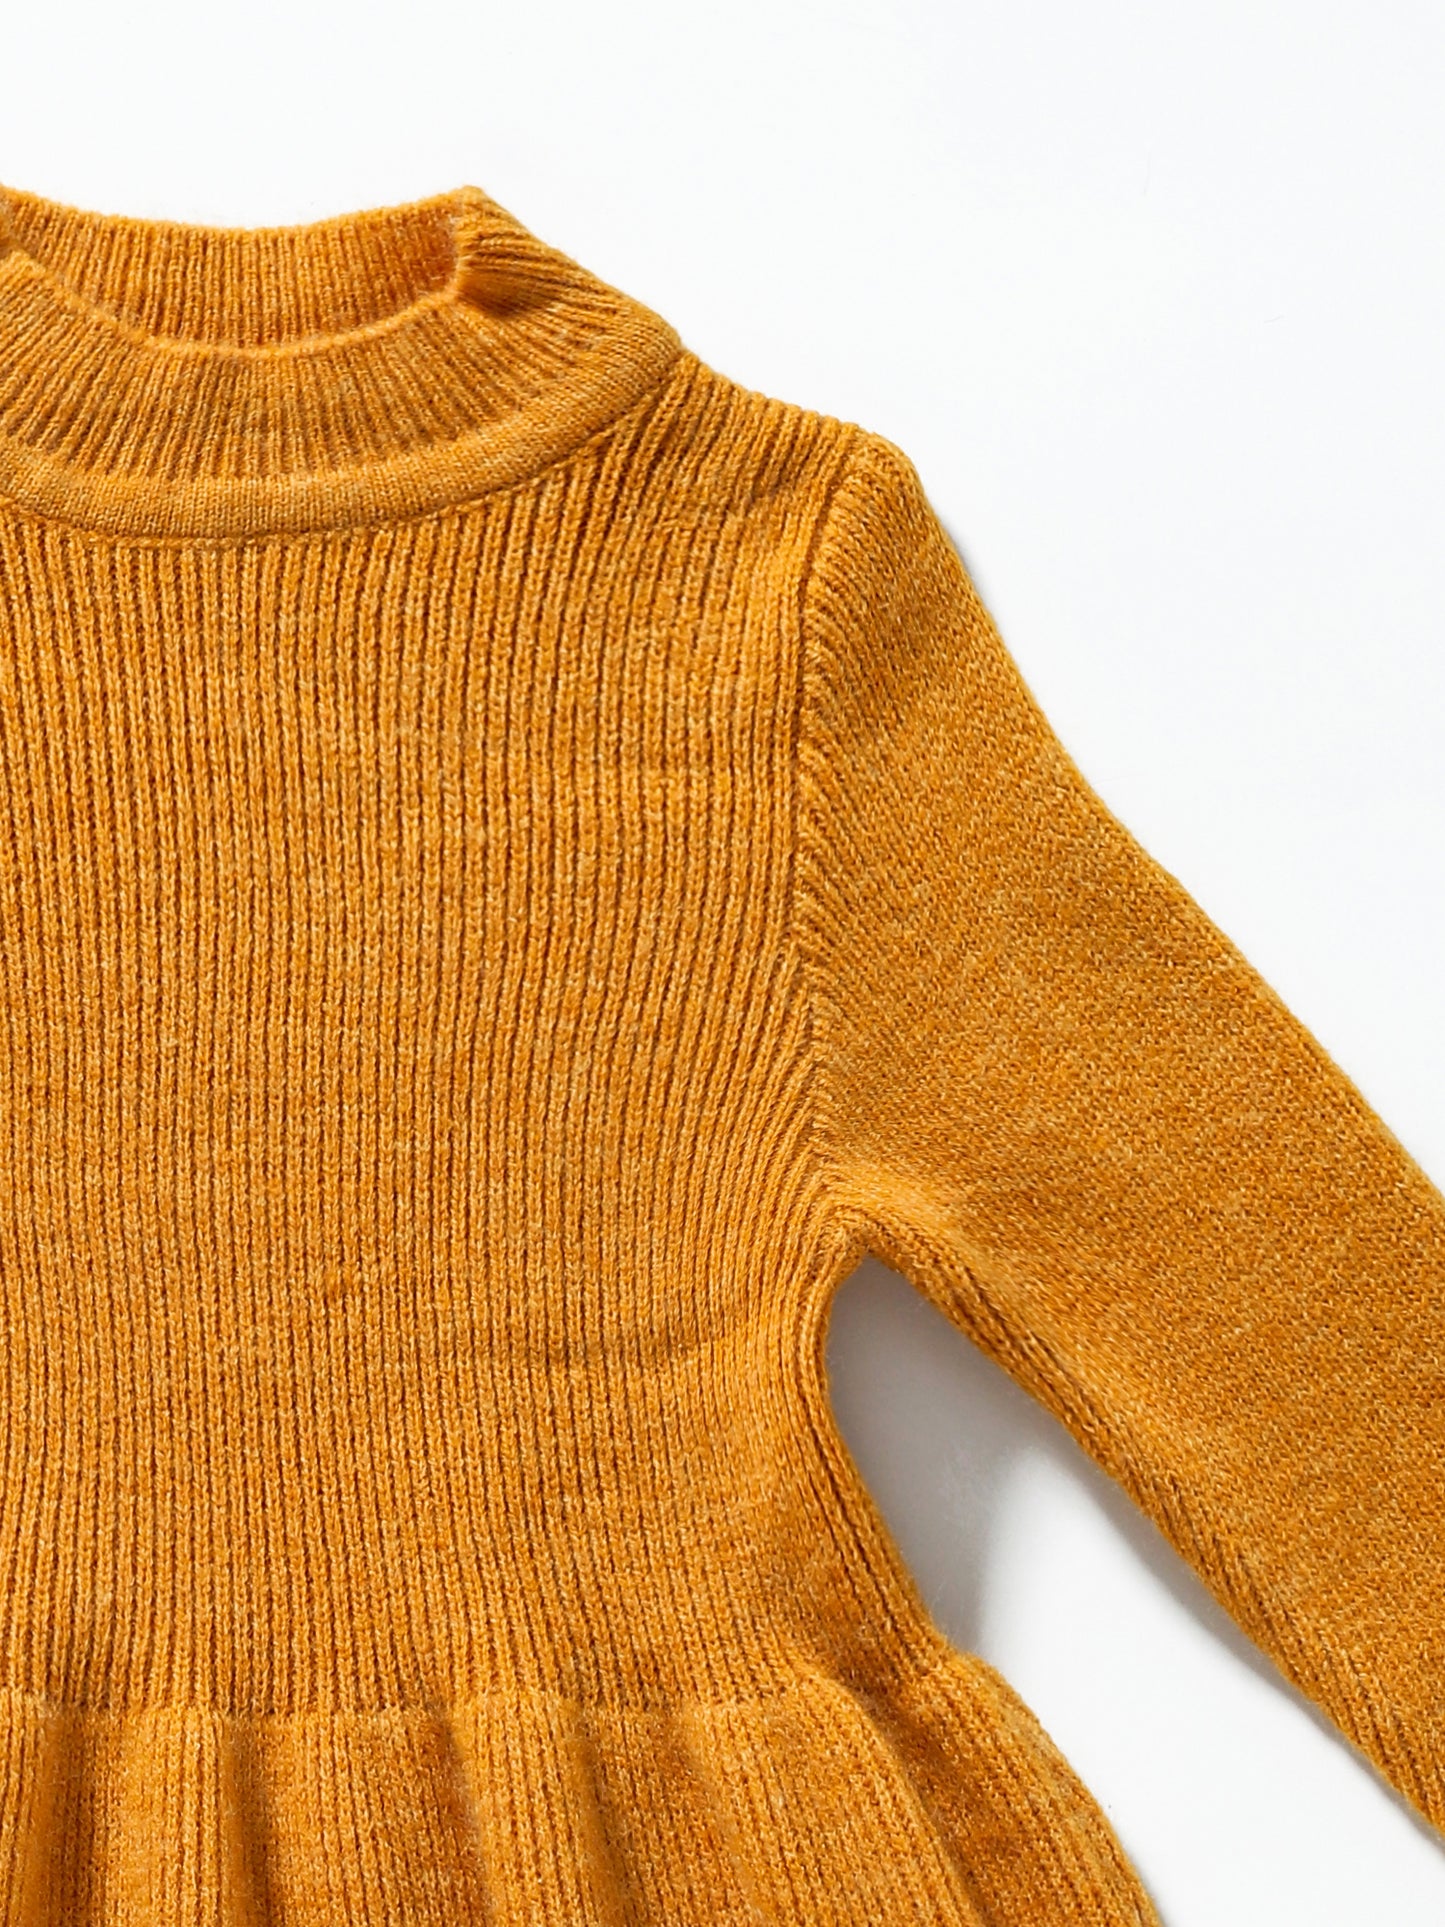 Girls Mustard Fall Sweater